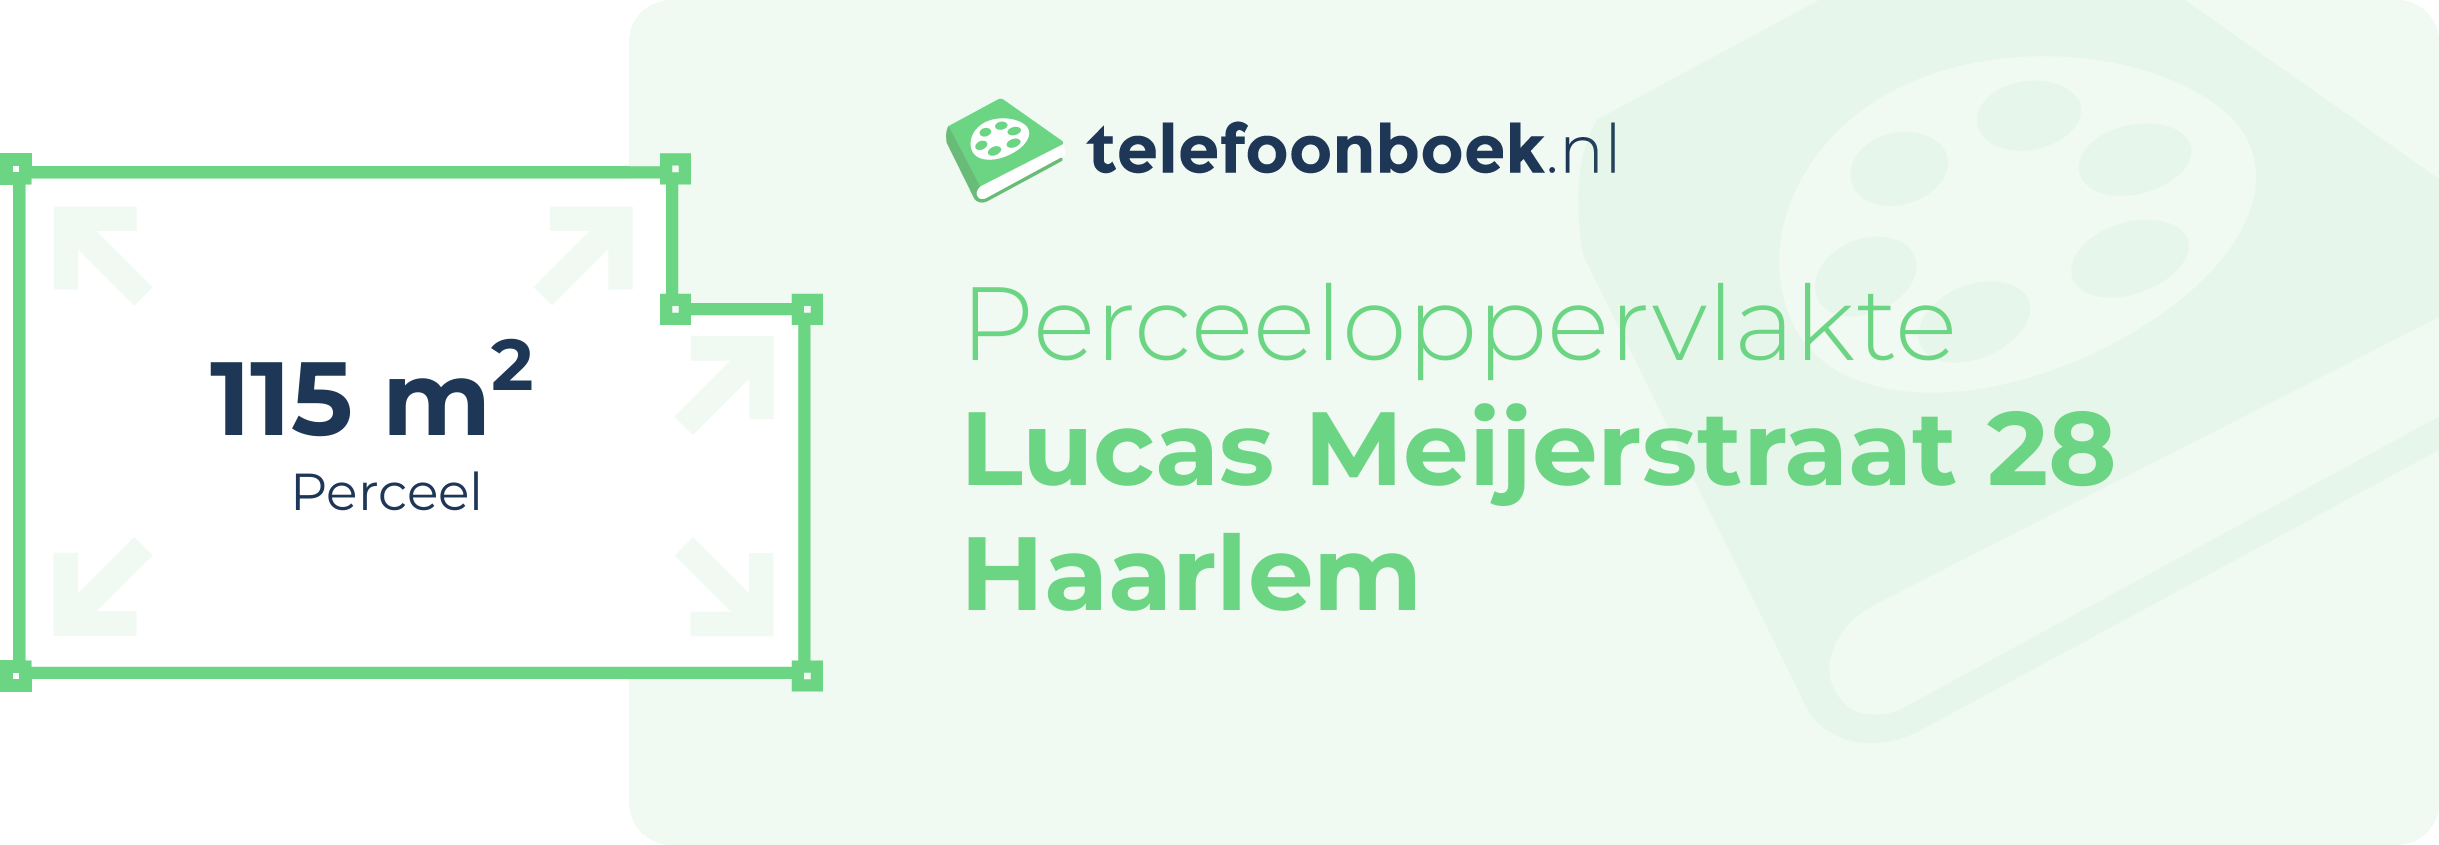 Perceeloppervlakte Lucas Meijerstraat 28 Haarlem